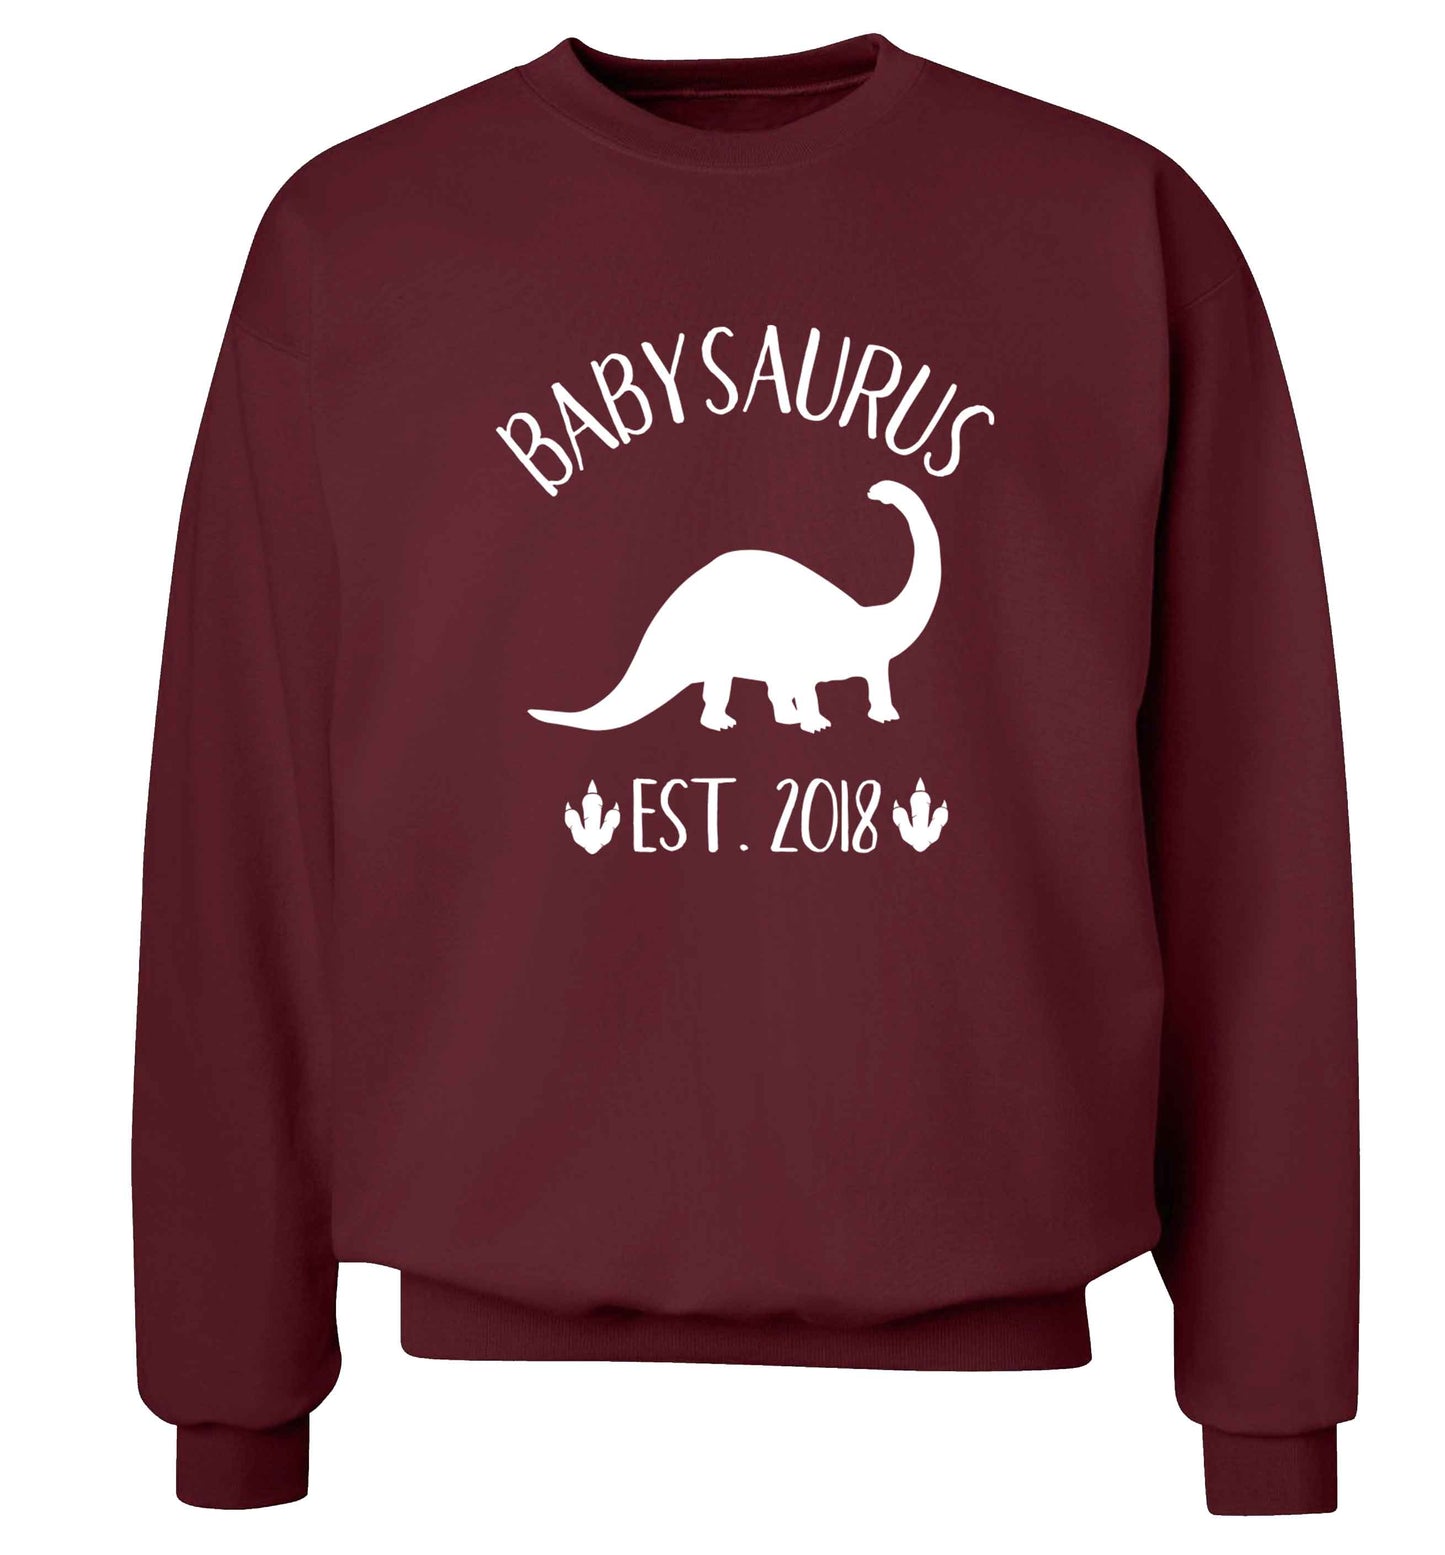 Personalised babysaurus since (custom date) Adult's unisex maroon Sweater 2XL